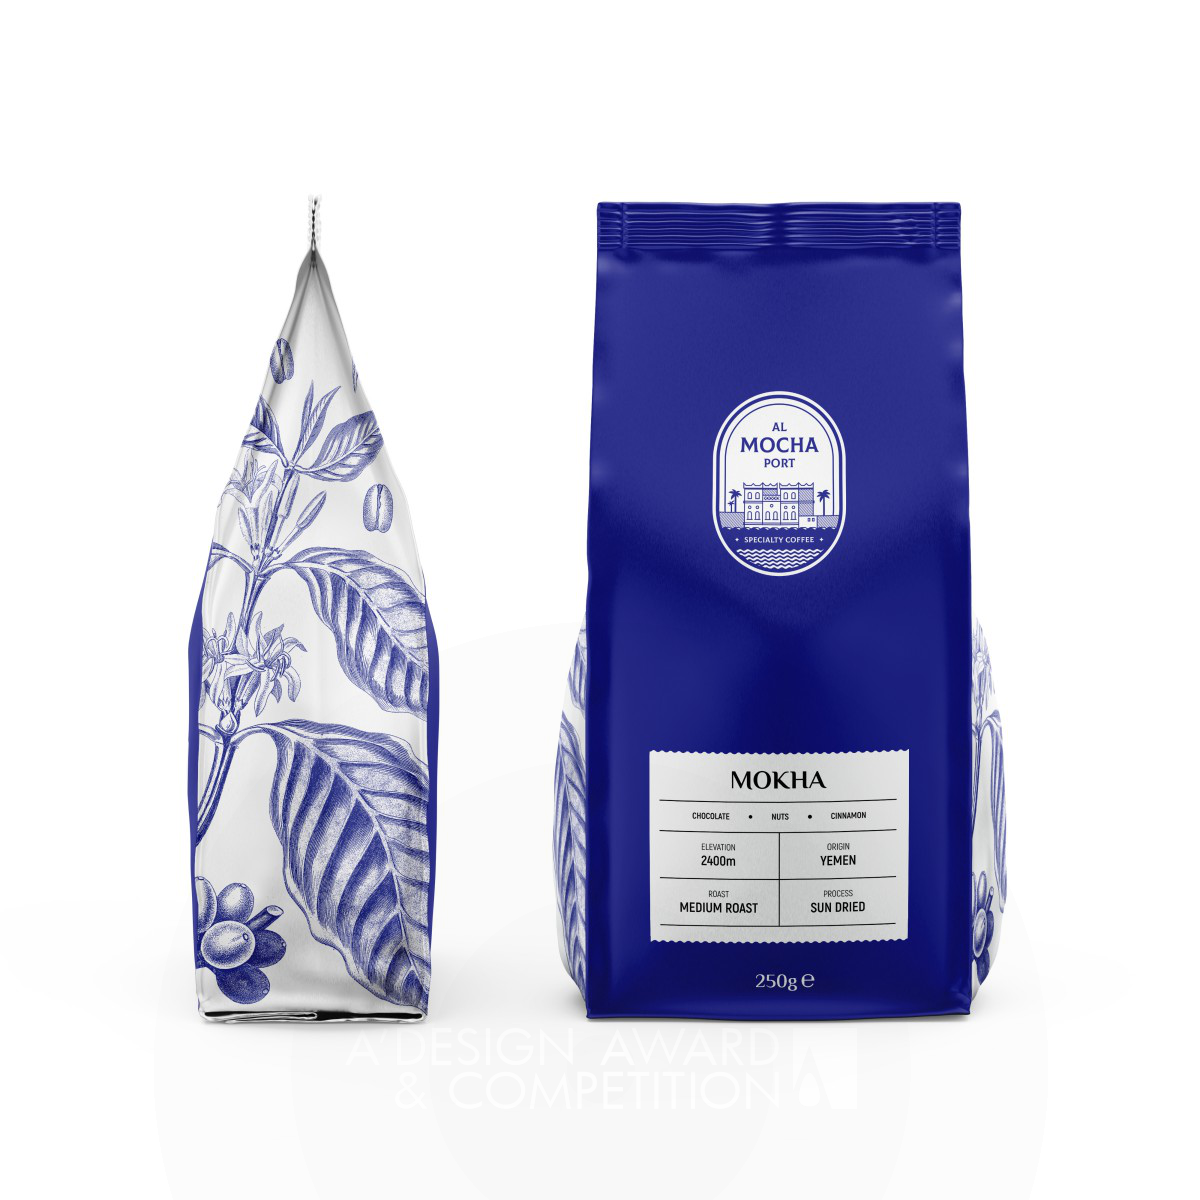 Al Mocha Port <b>Coffee Packaging